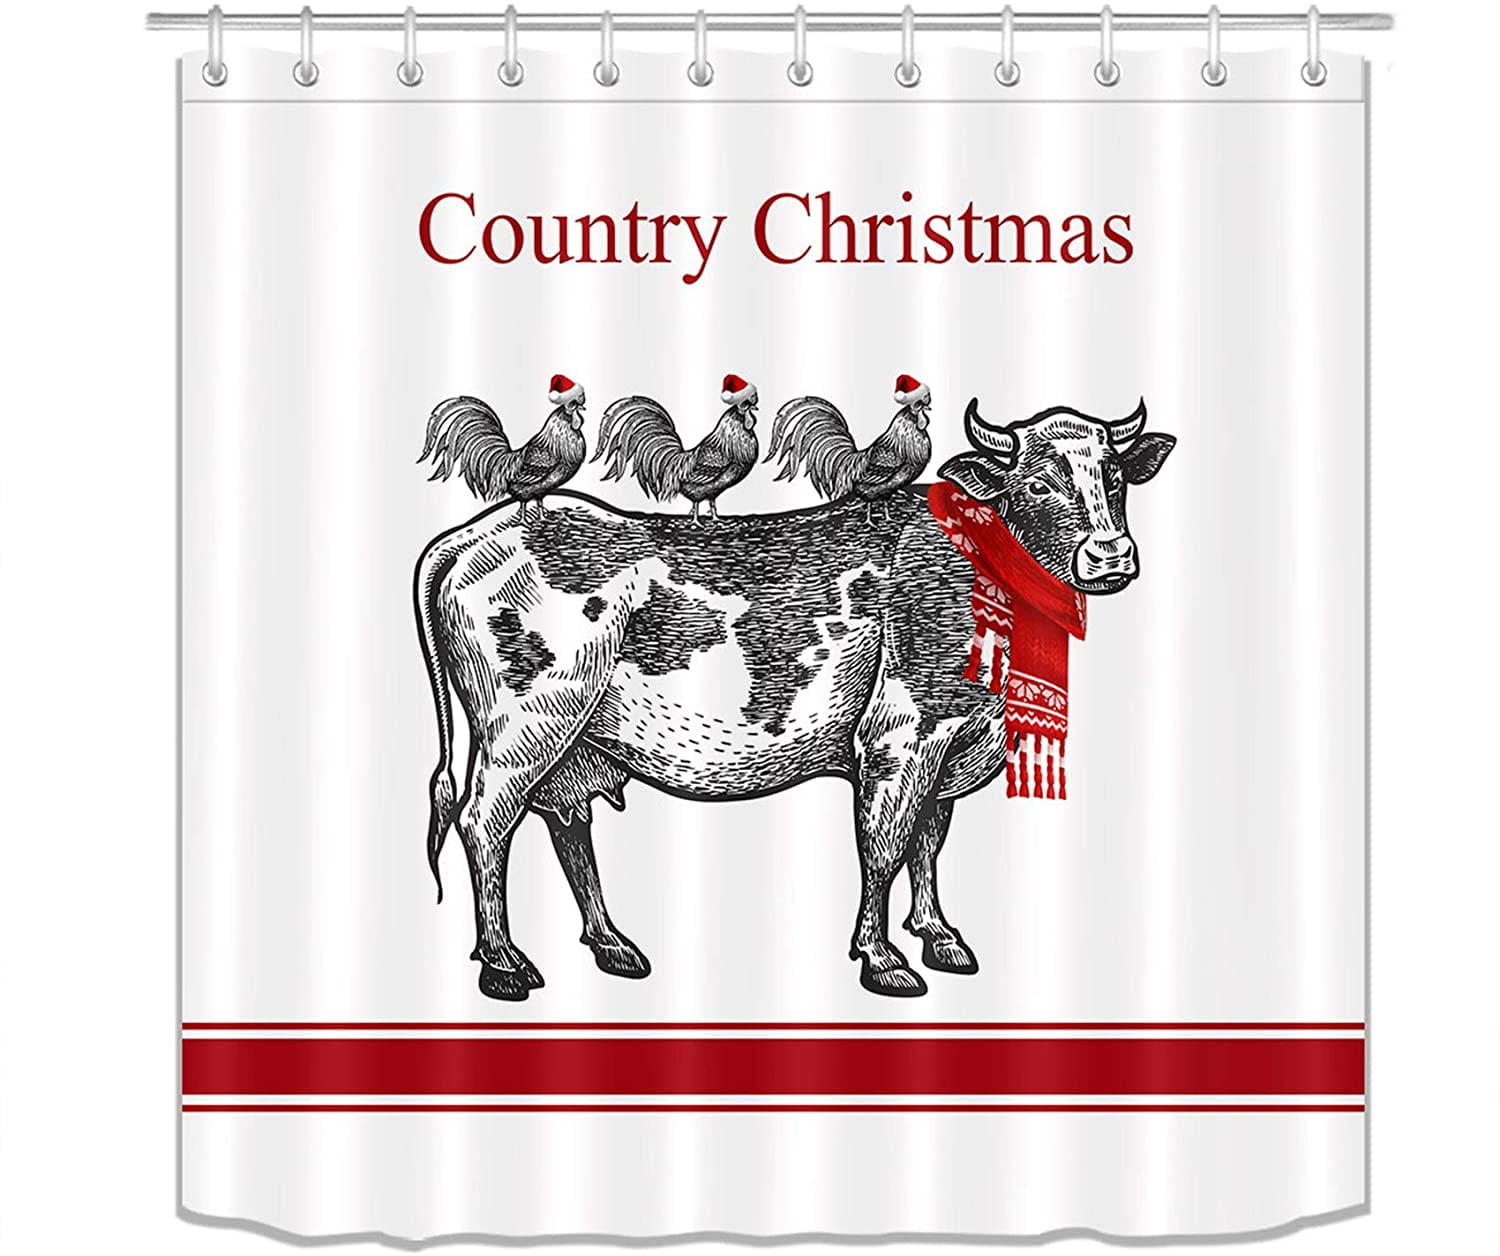 Christmas Snow Forest Farm Cows Santa Hats Waterproof Fabric Shower Curtain Set